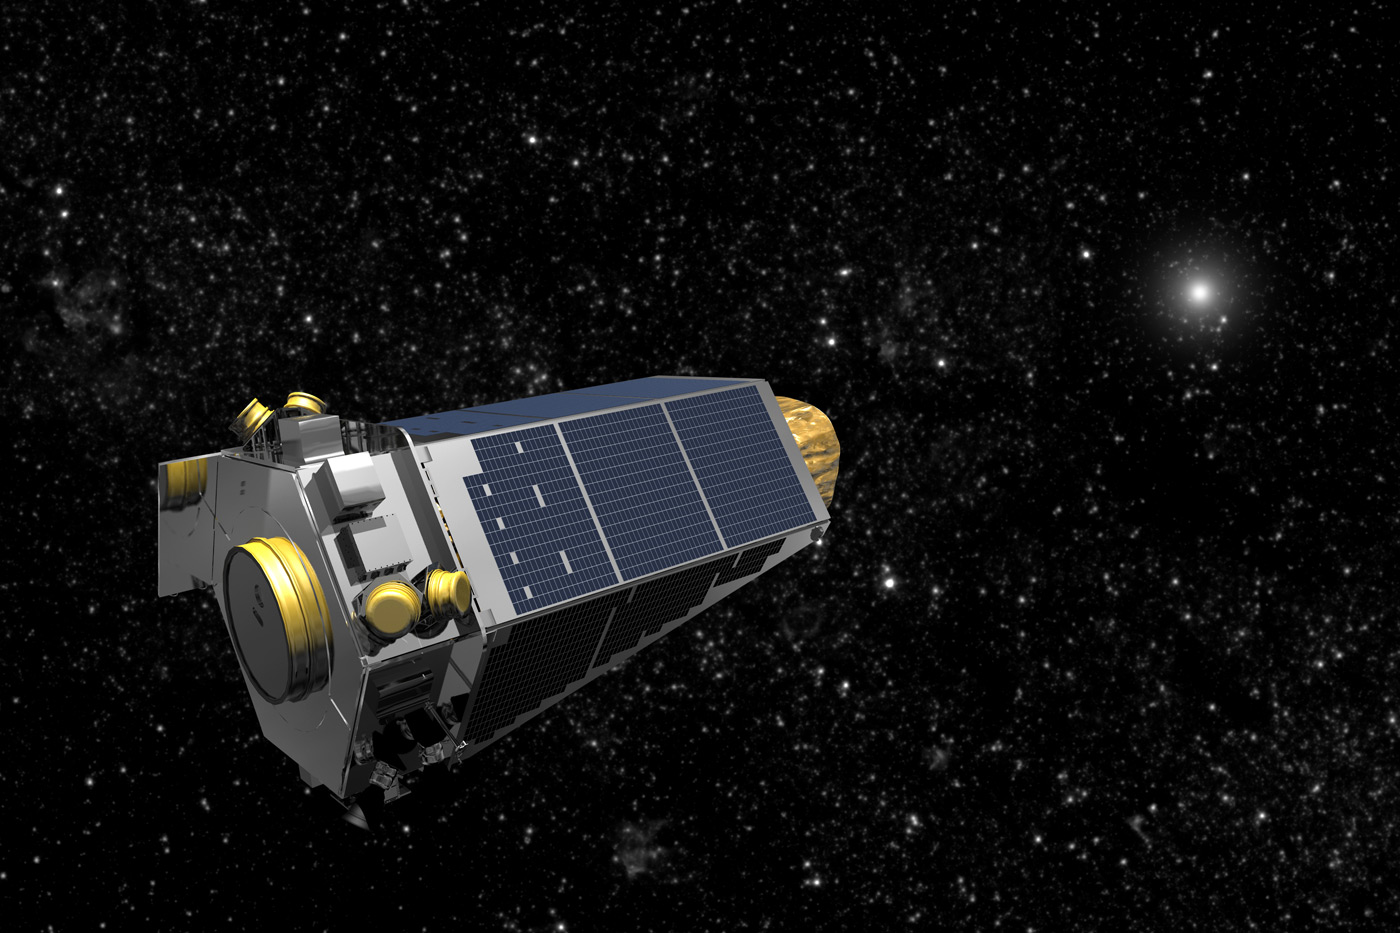 NASA&#039;s Kepler space telescope is back in good health